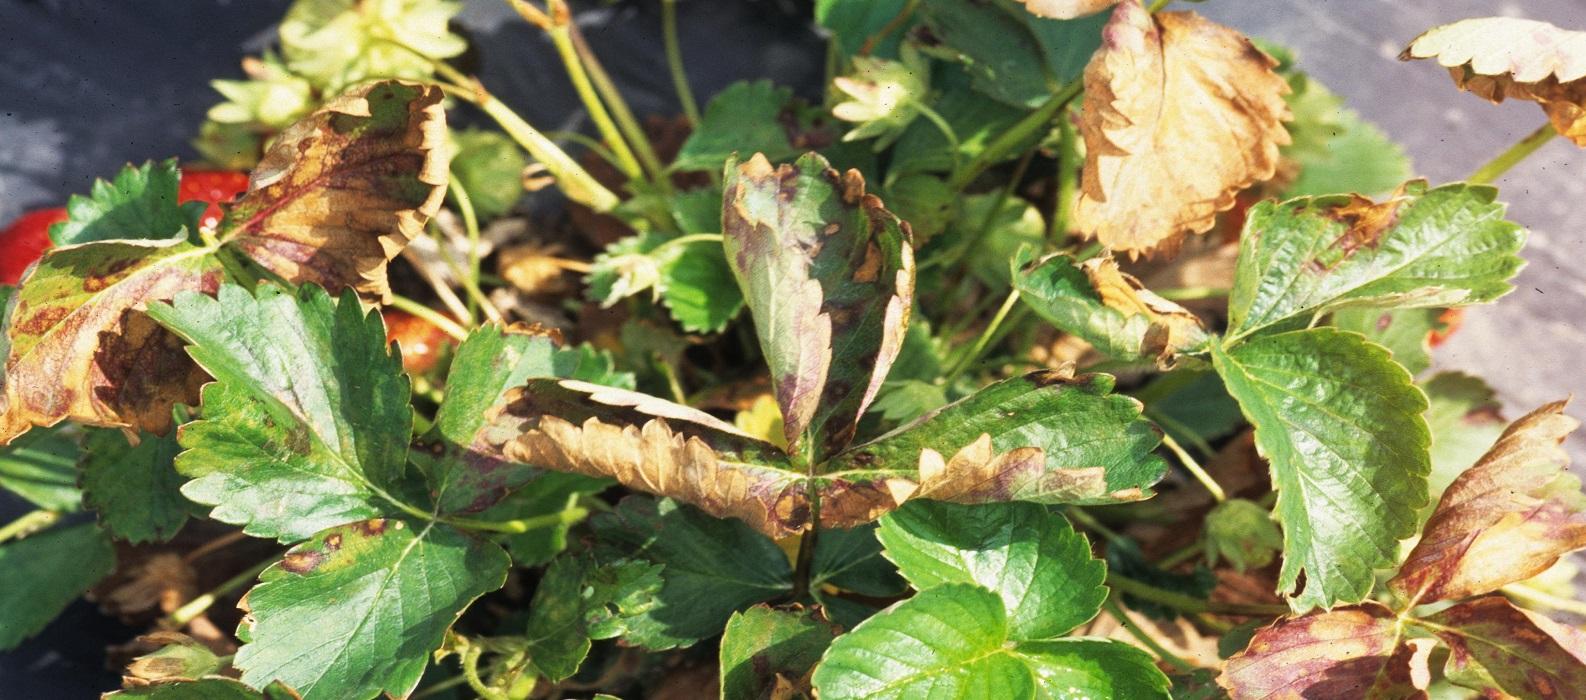 frost damage on strawberry plants